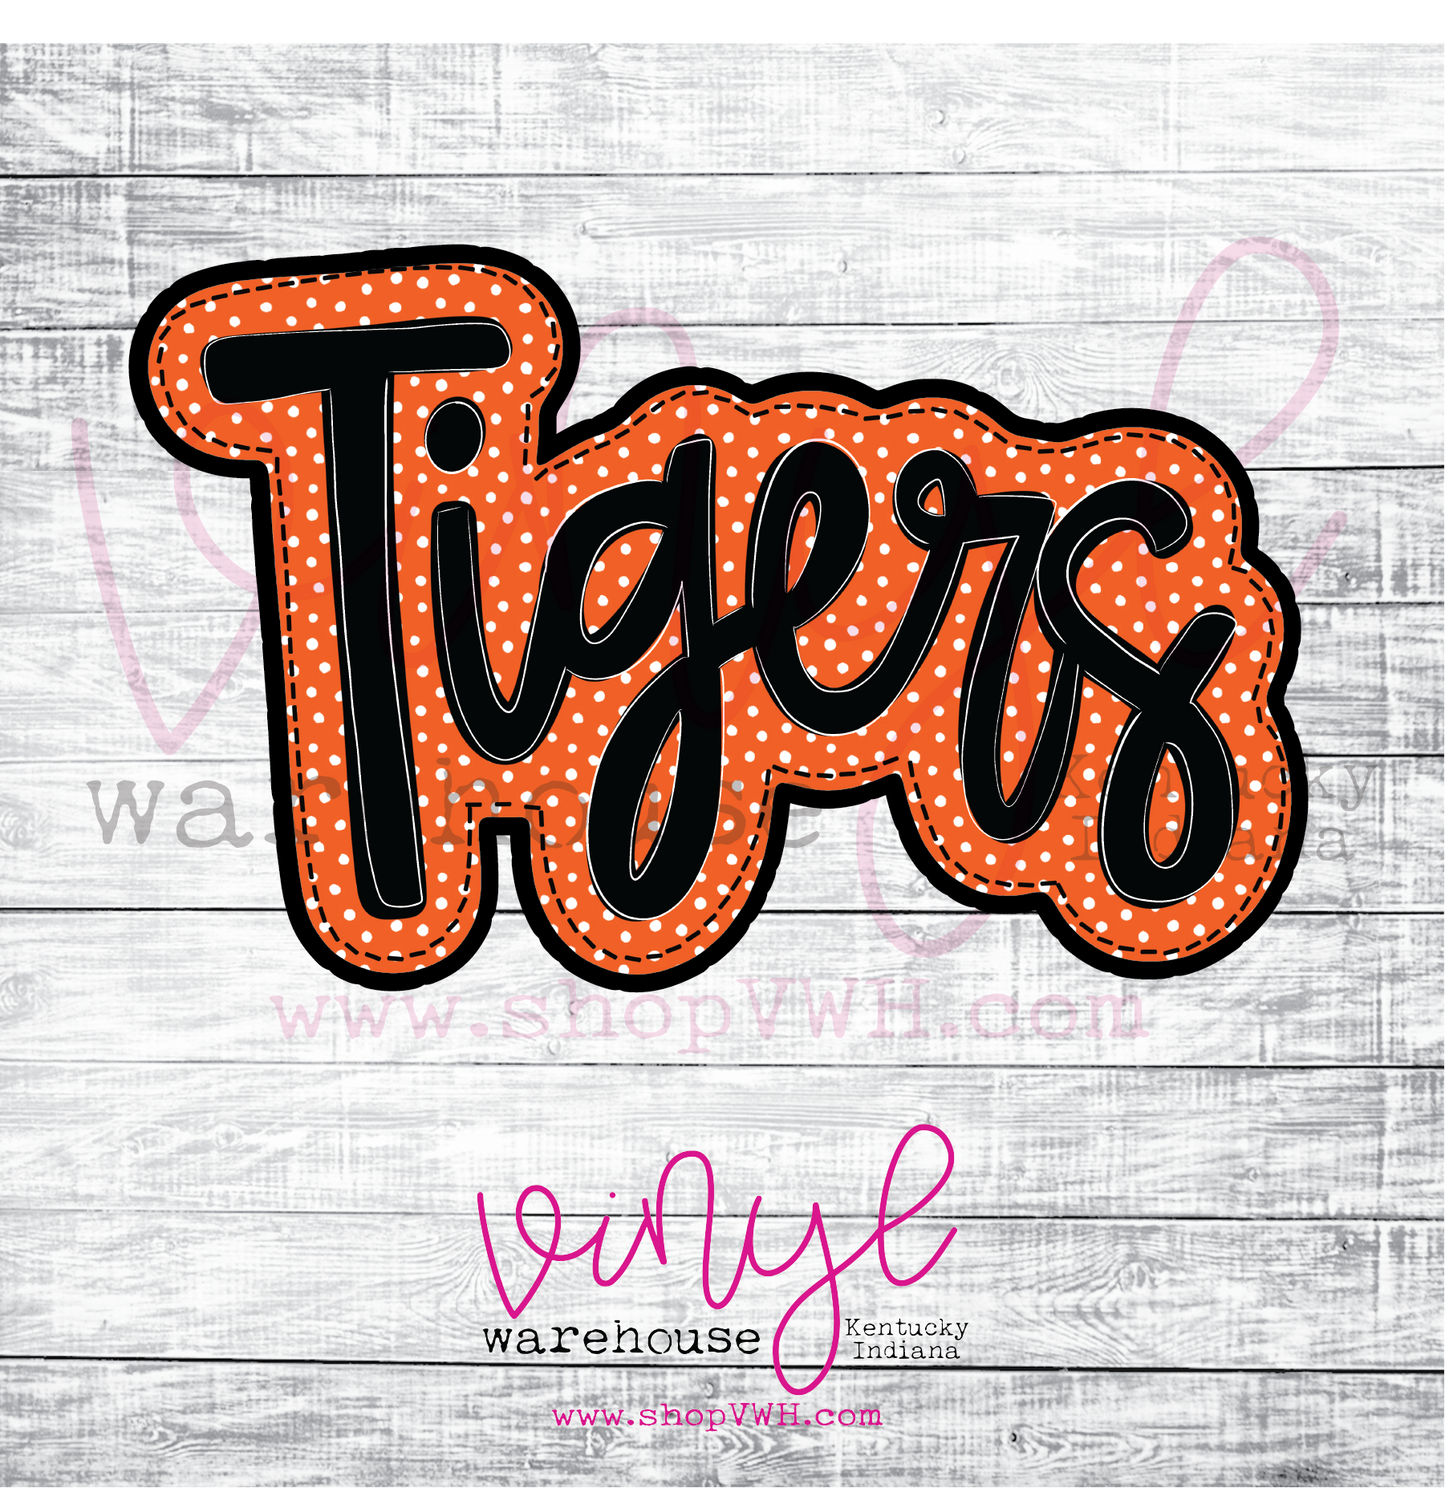 Printed Adhesive Decal - Tigers (Black & Orange/White Polka Dot)